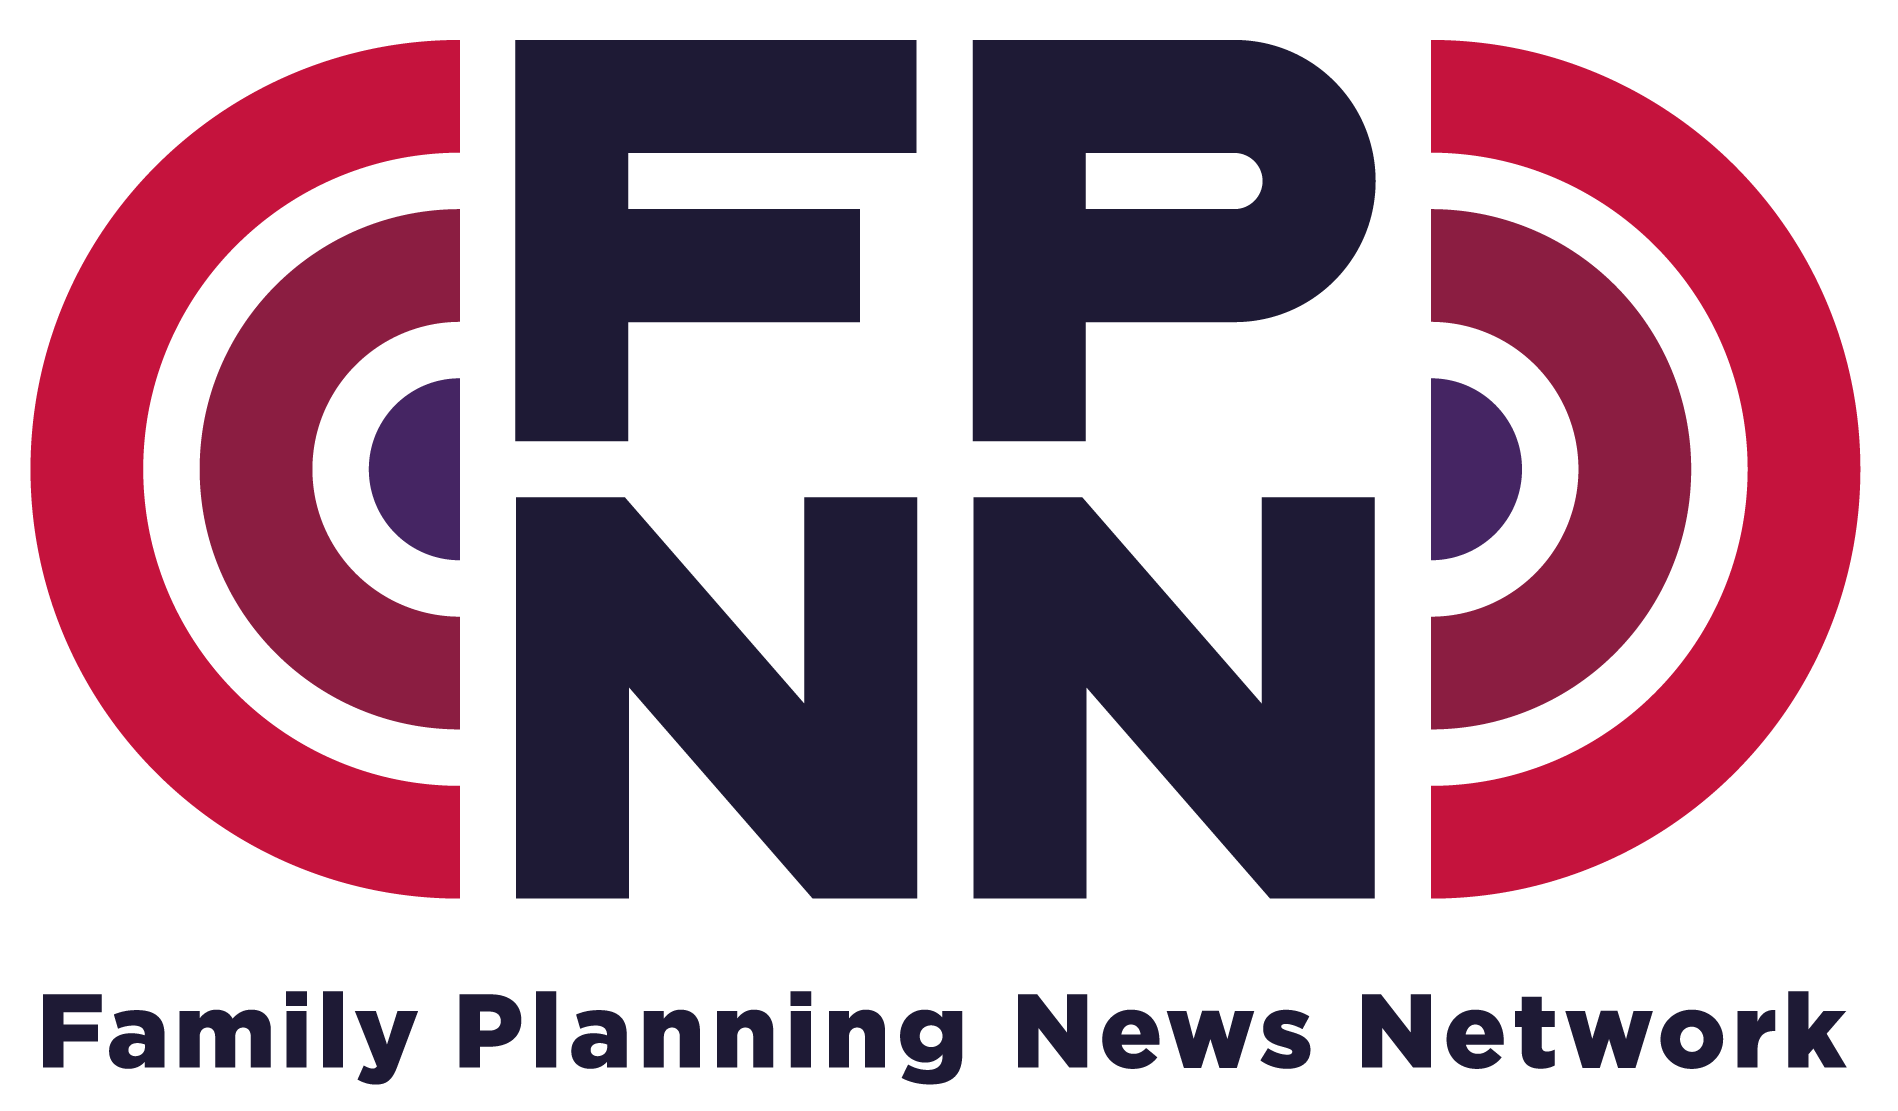 FPNN Media Briefing: Climate Agenda & SRHR